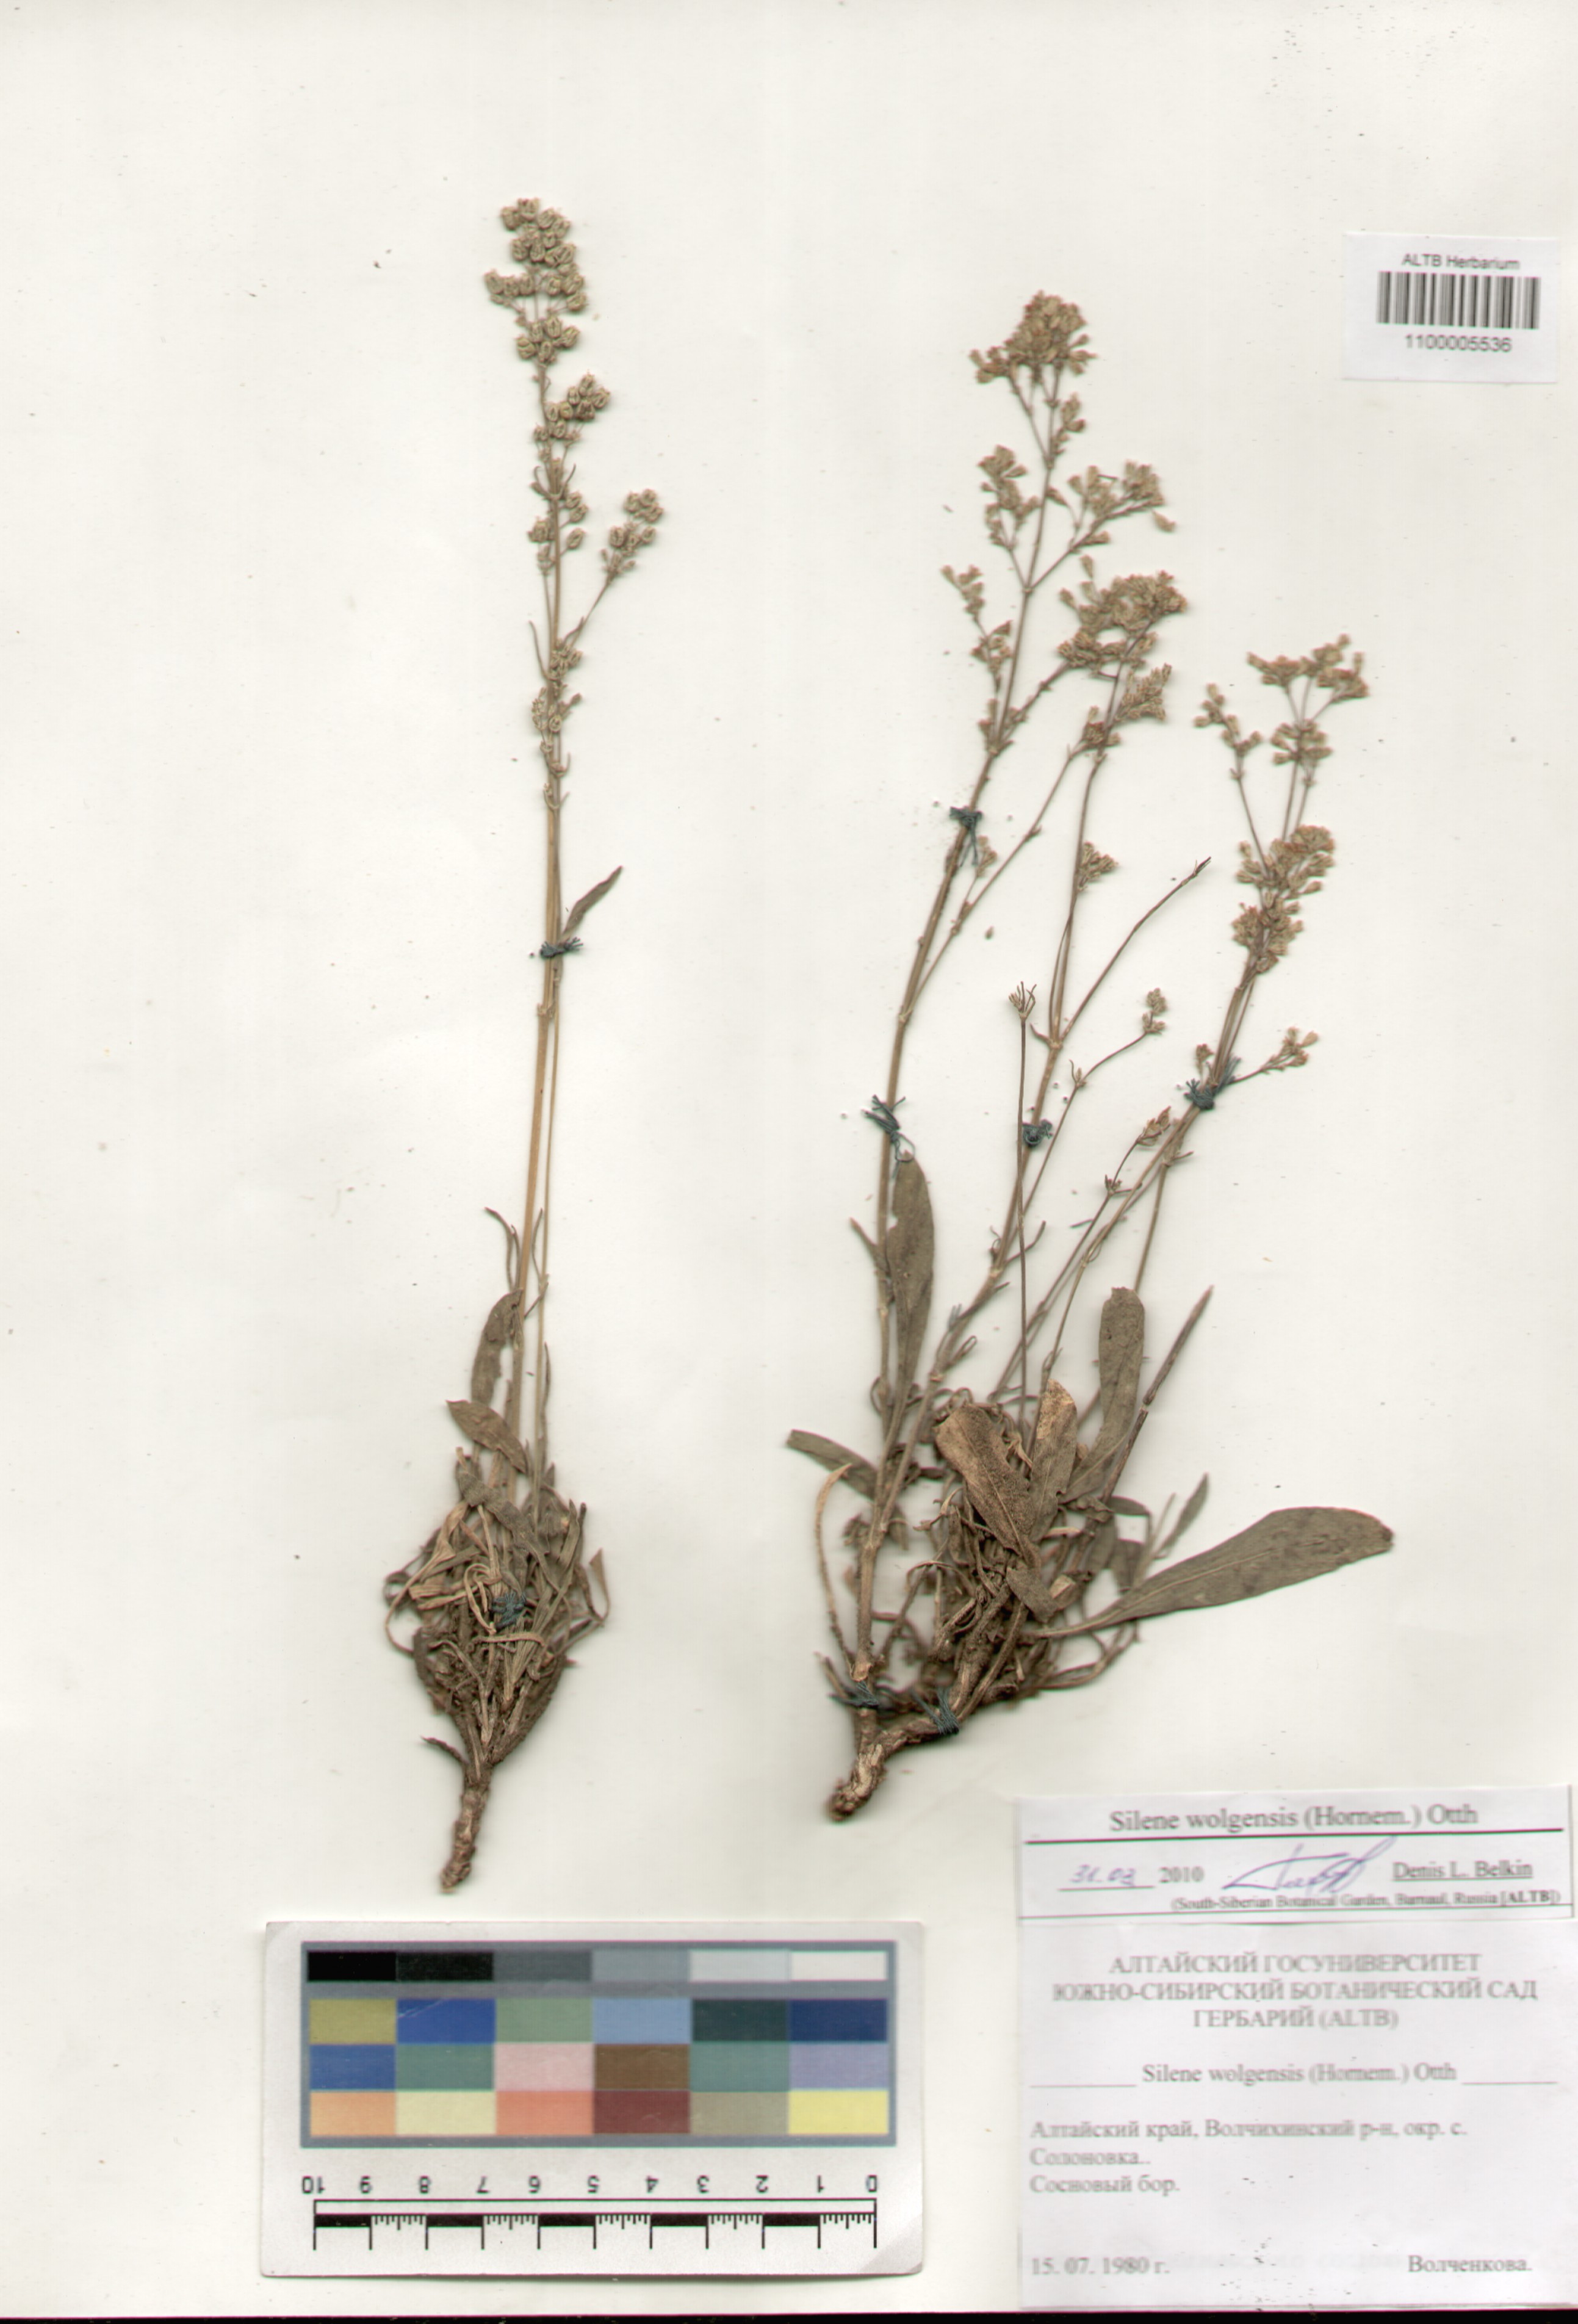 Caryophyllaceae,Silene wolgensis (Hornem.) Otth